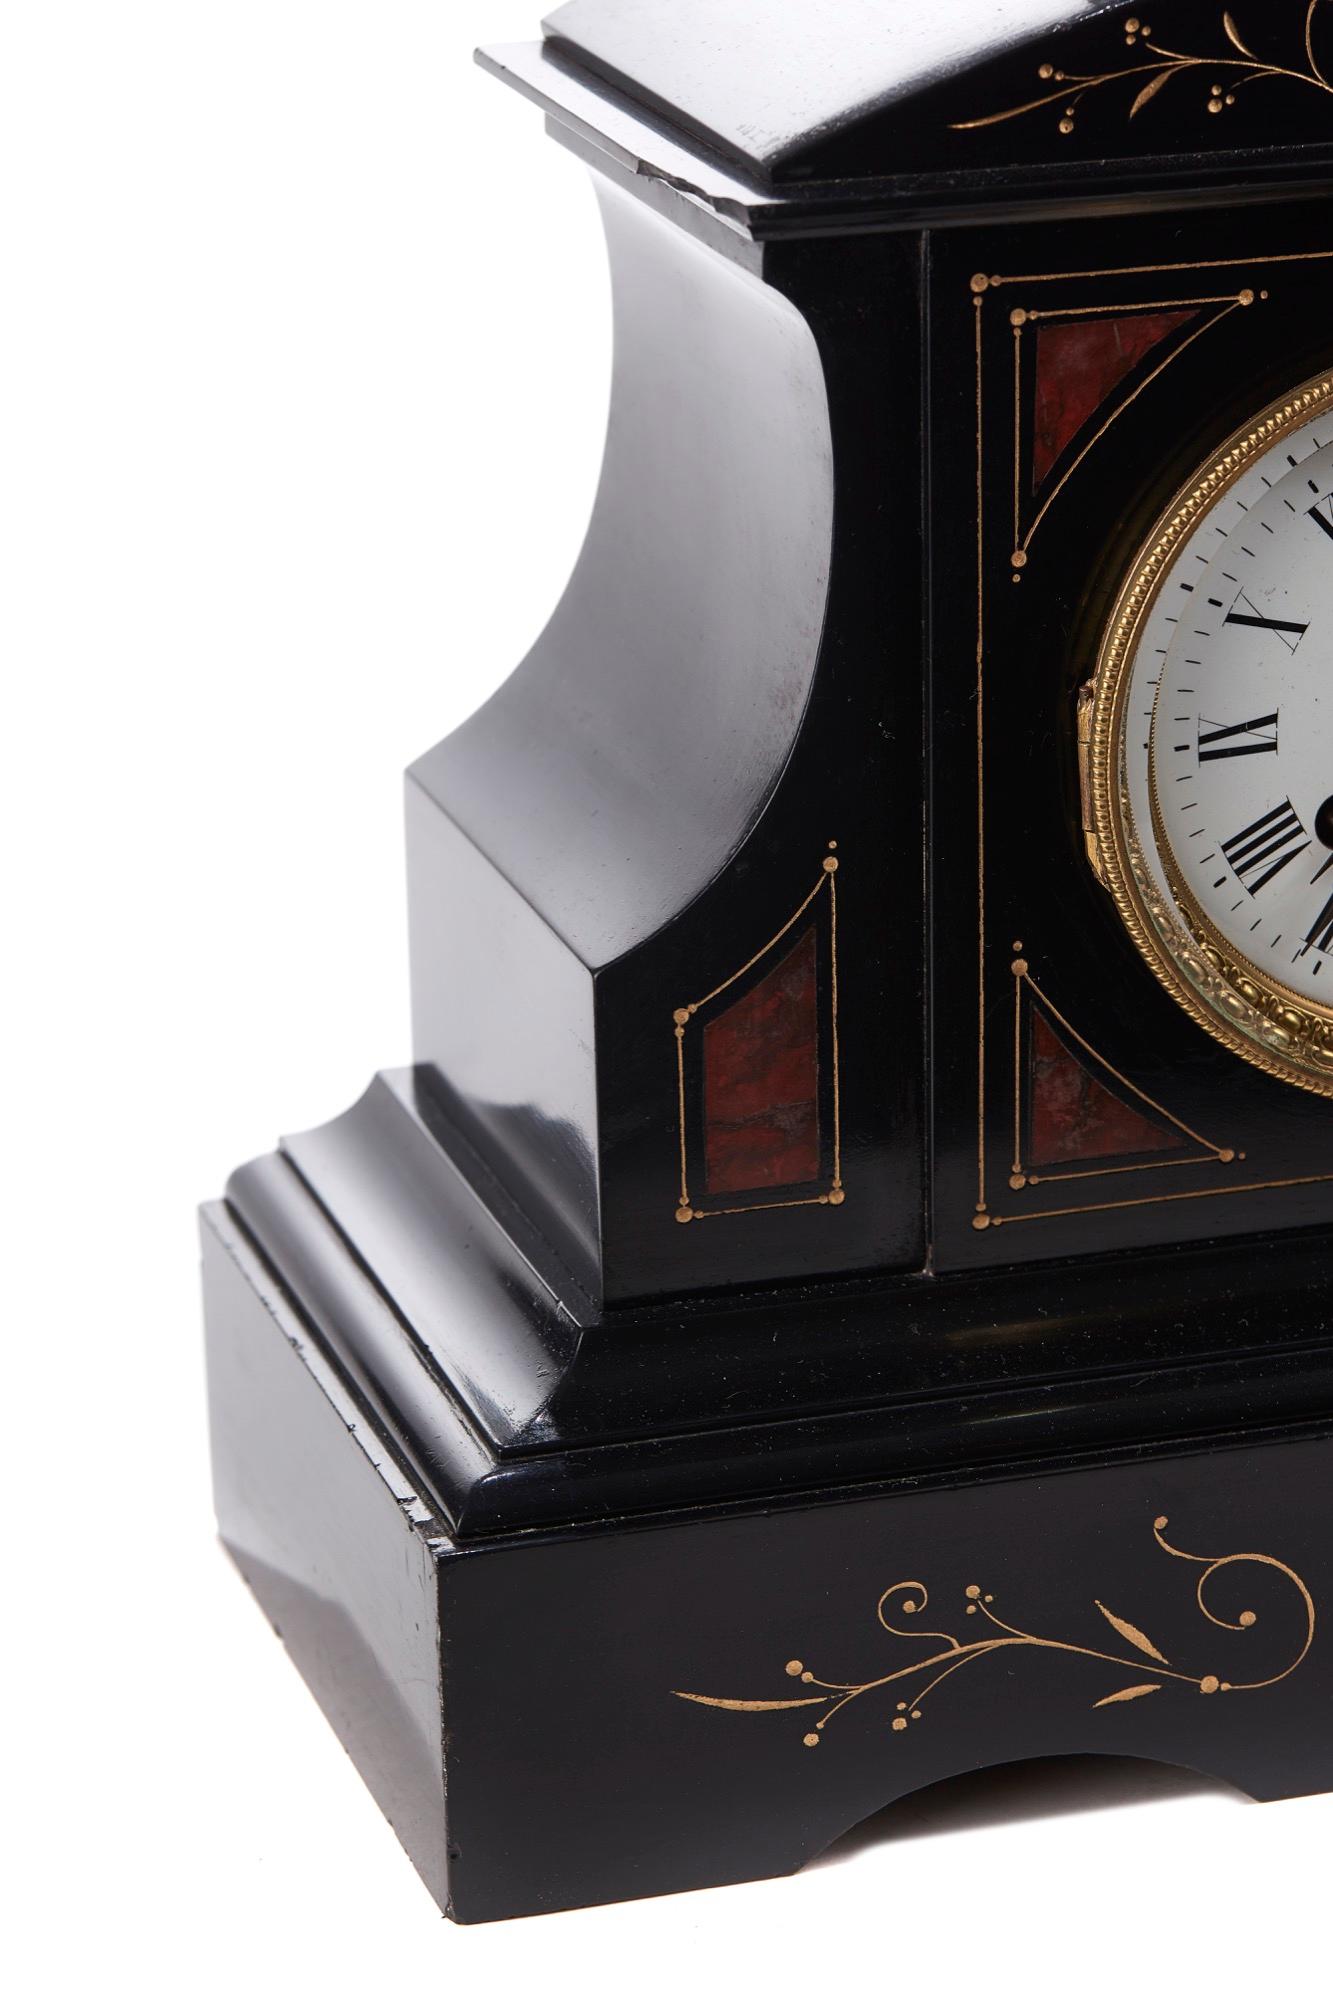 antique marble mantel clocks